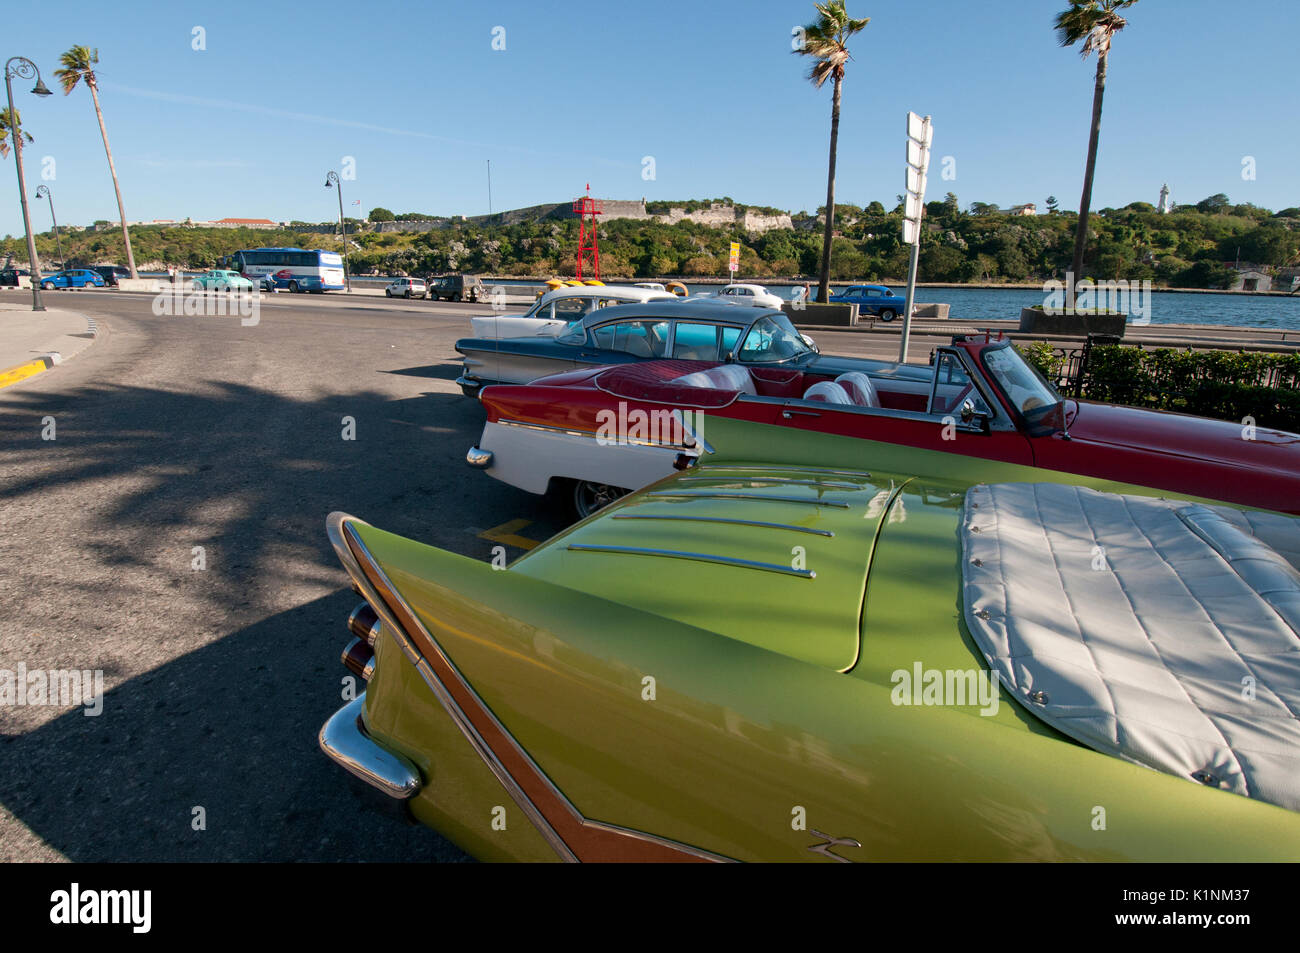 1957 Desoto und andere klassische amerikanische Autos in Havanna Kuba Stockfoto